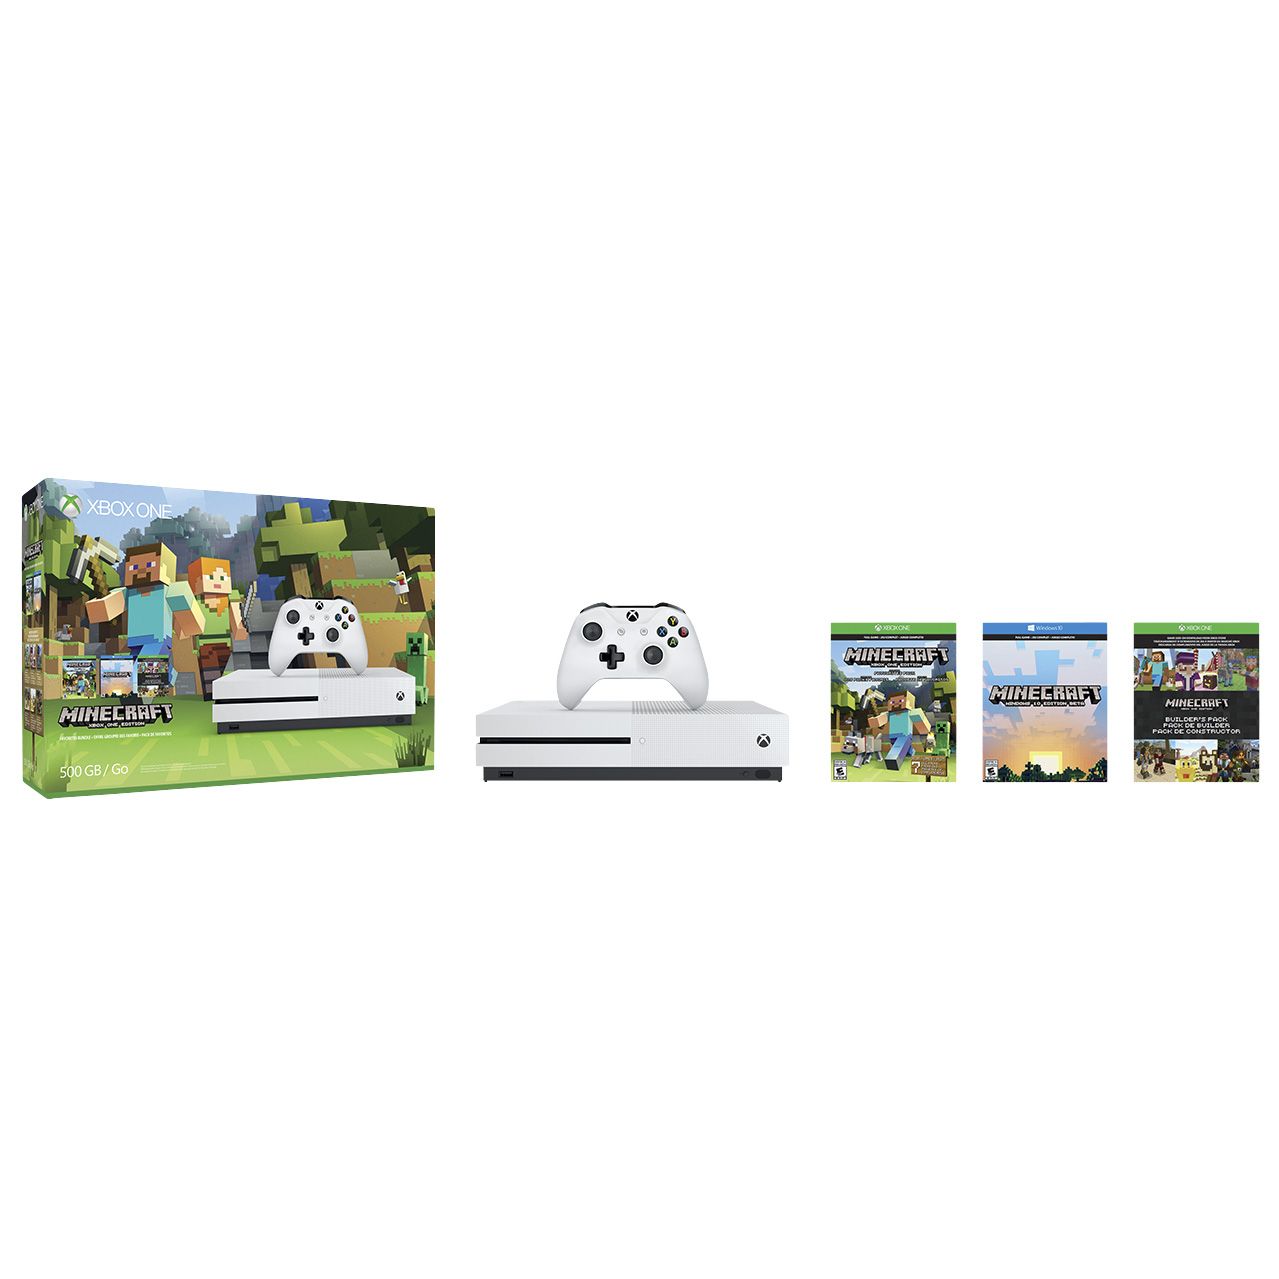  Xbox One S 500GB Console - Minecraft Bundle